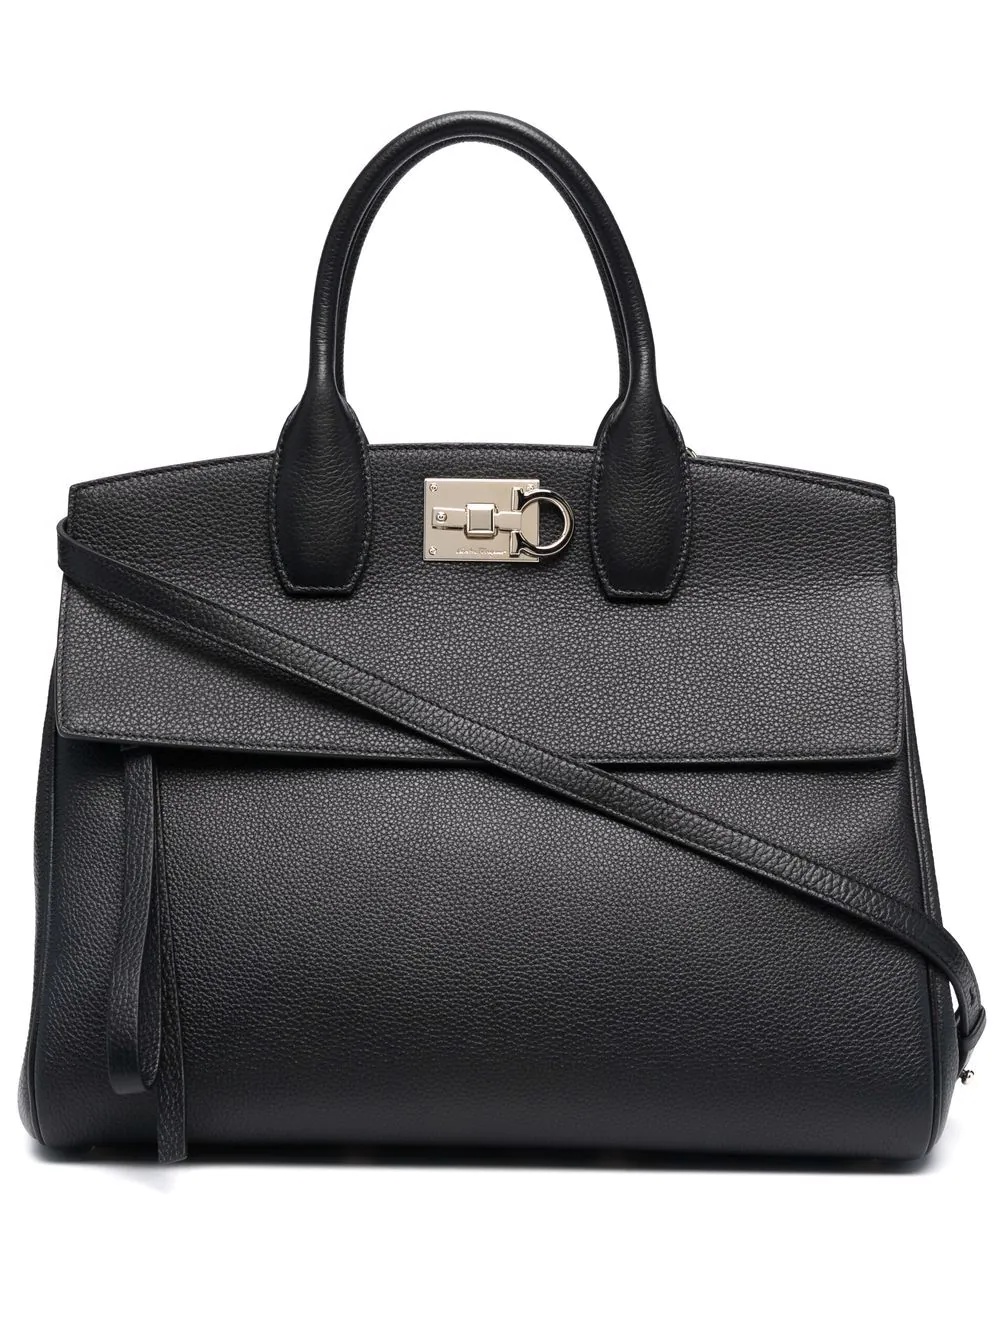 Gancini leather tote bag - 1